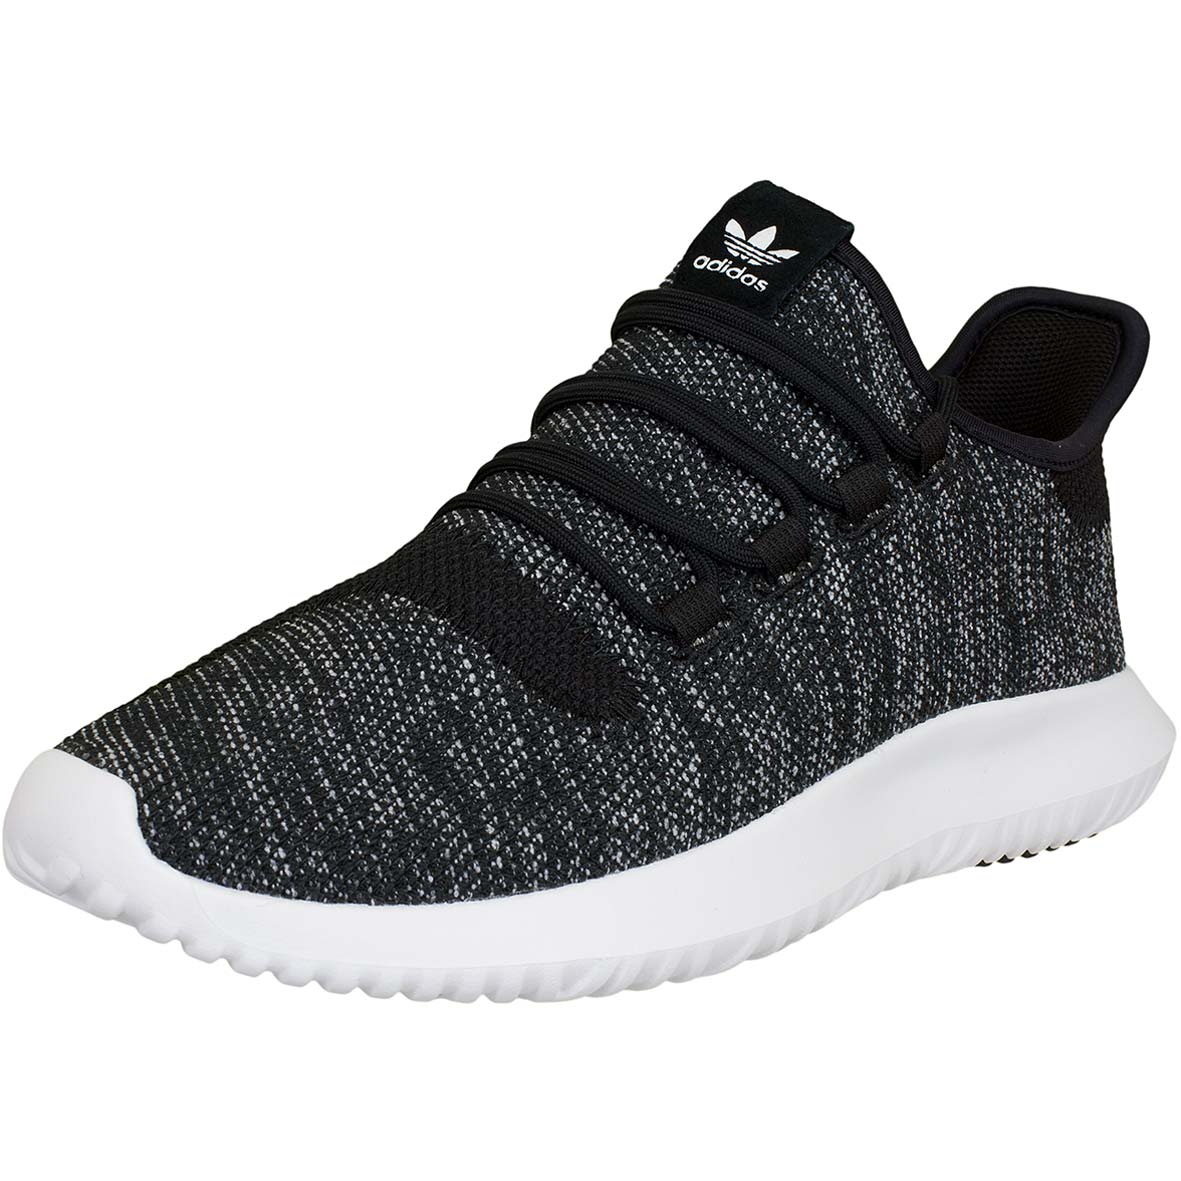 ☆ Adidas Originals Sneaker Tubular Shadow schwarz - hier bestellen!